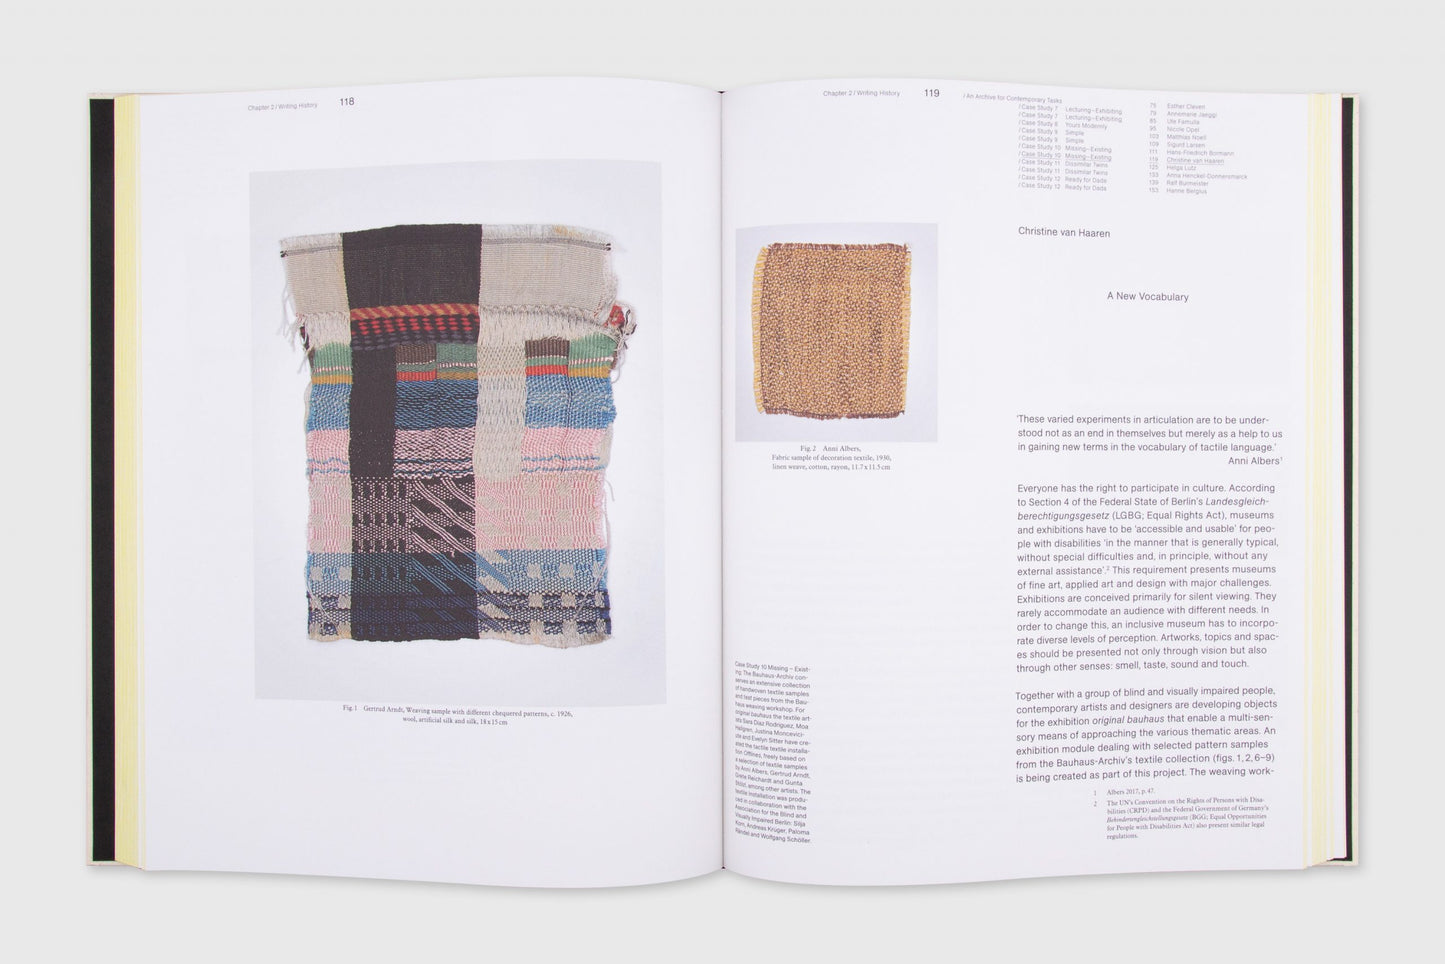 Original Bauhaus: Catalogue